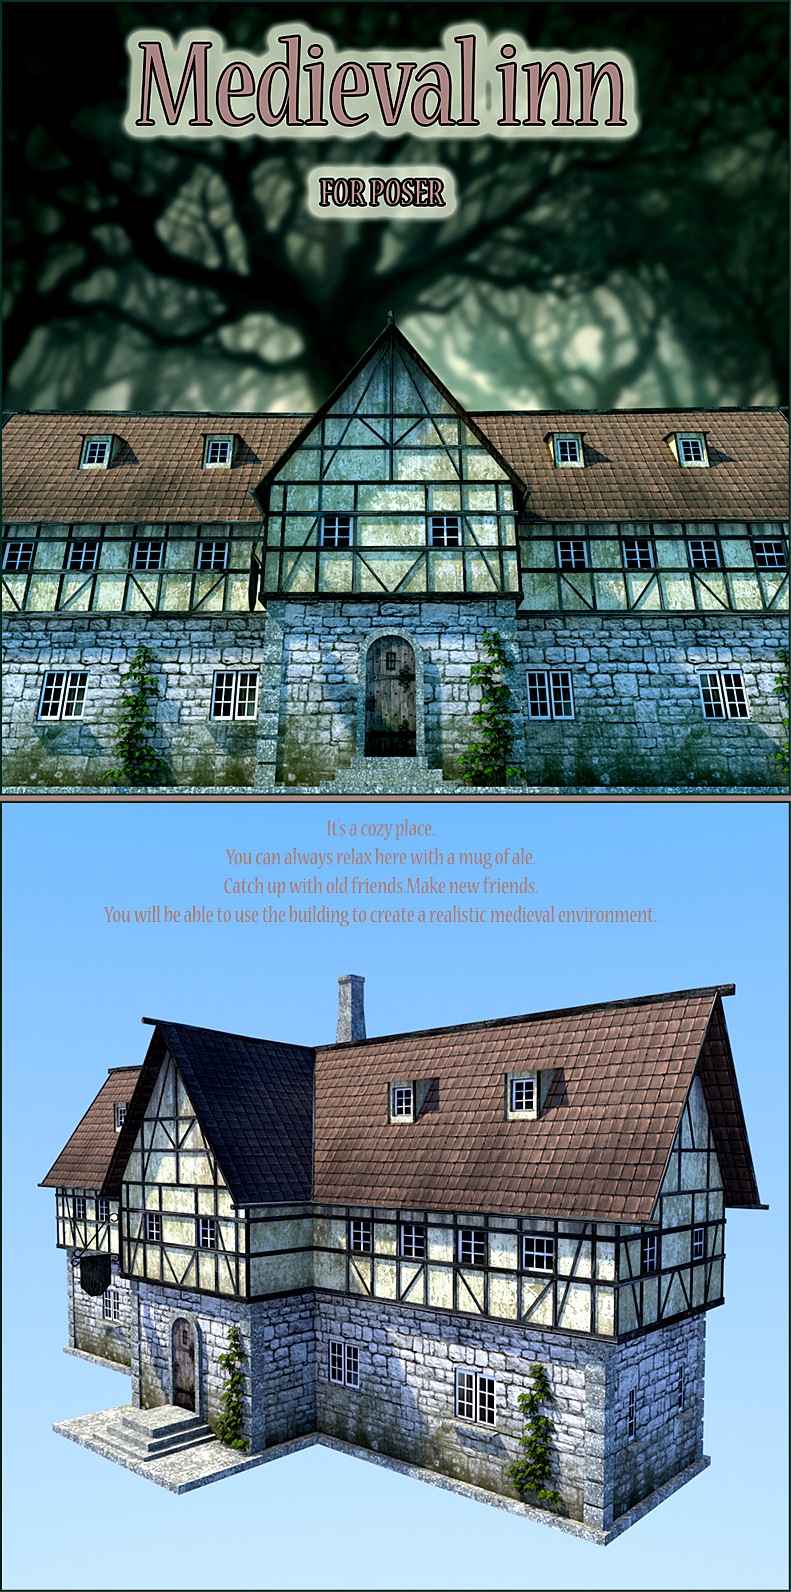 Medieval inn